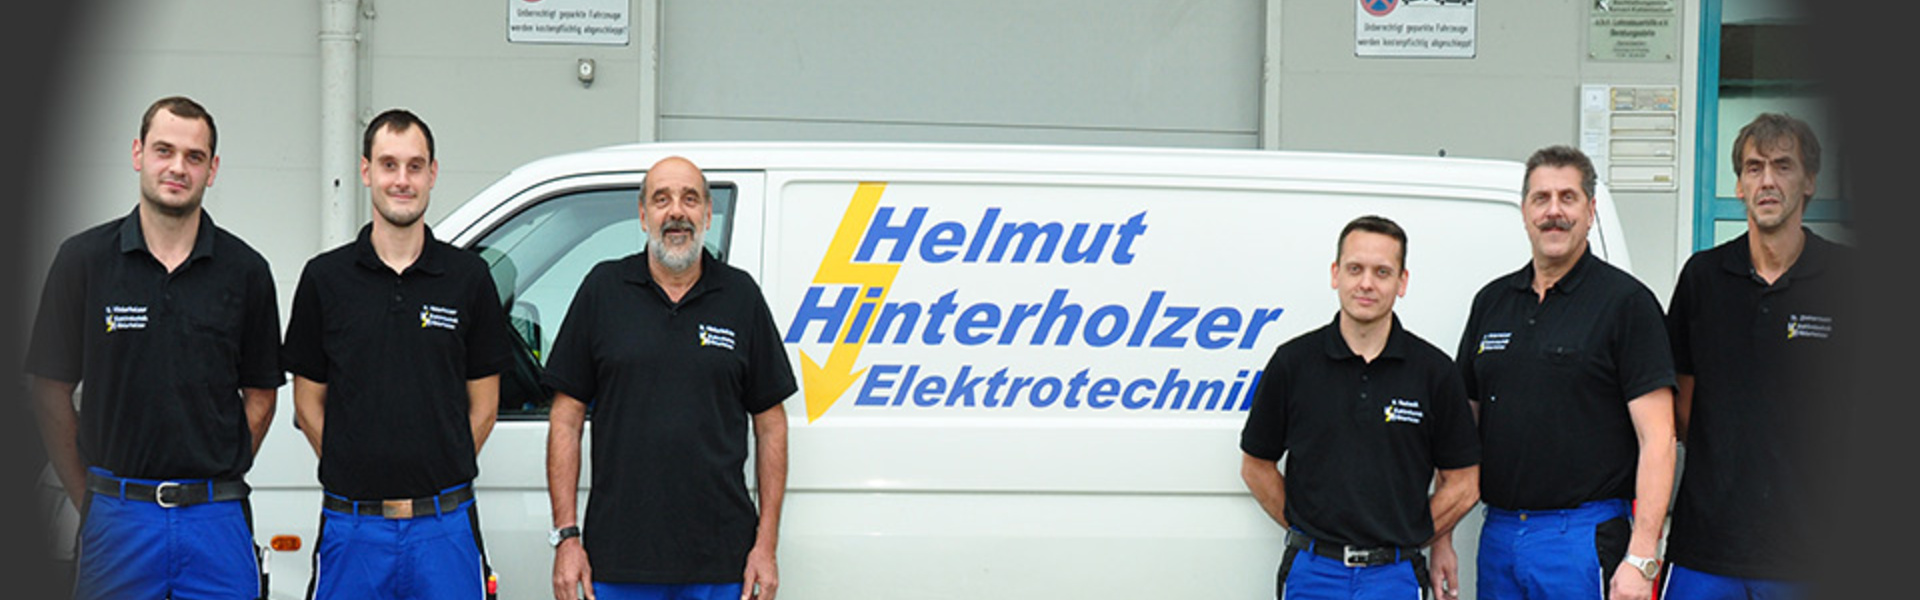 Hinterholzer Elektrotechnik e.K. in Unterschleißheim